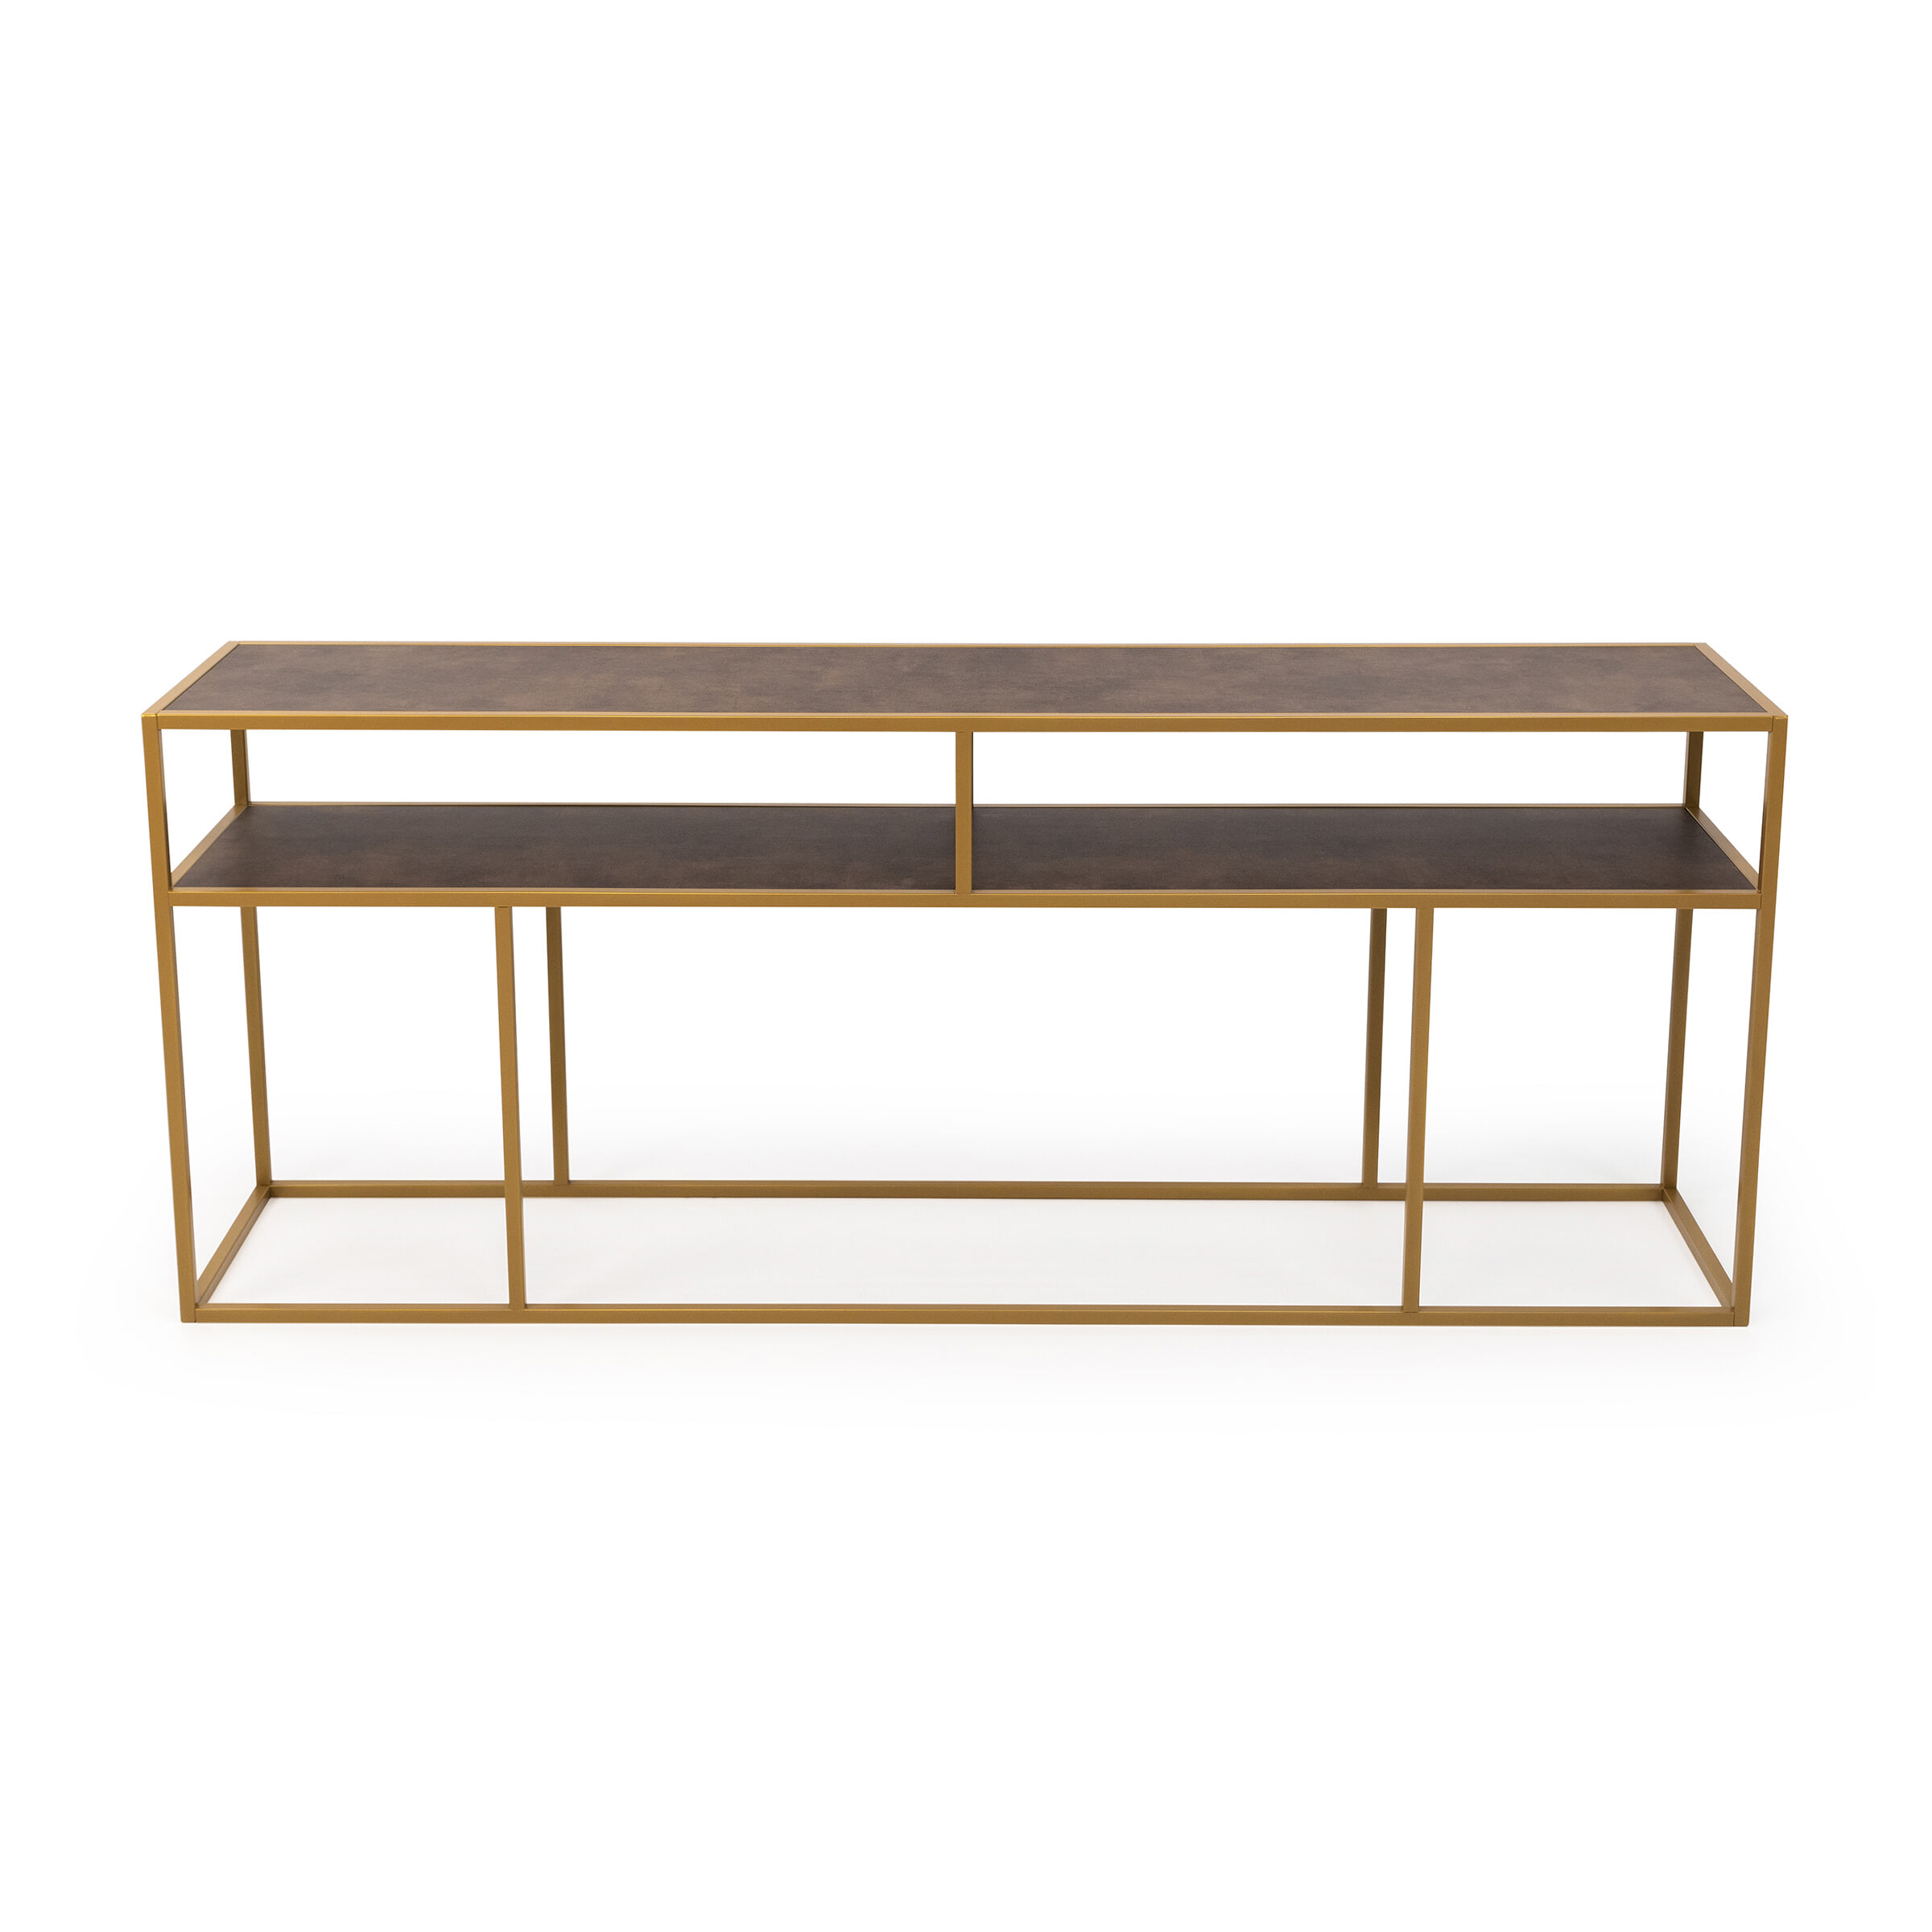 STALUX Side-table Teun 200cm - goud / lederlook bruin